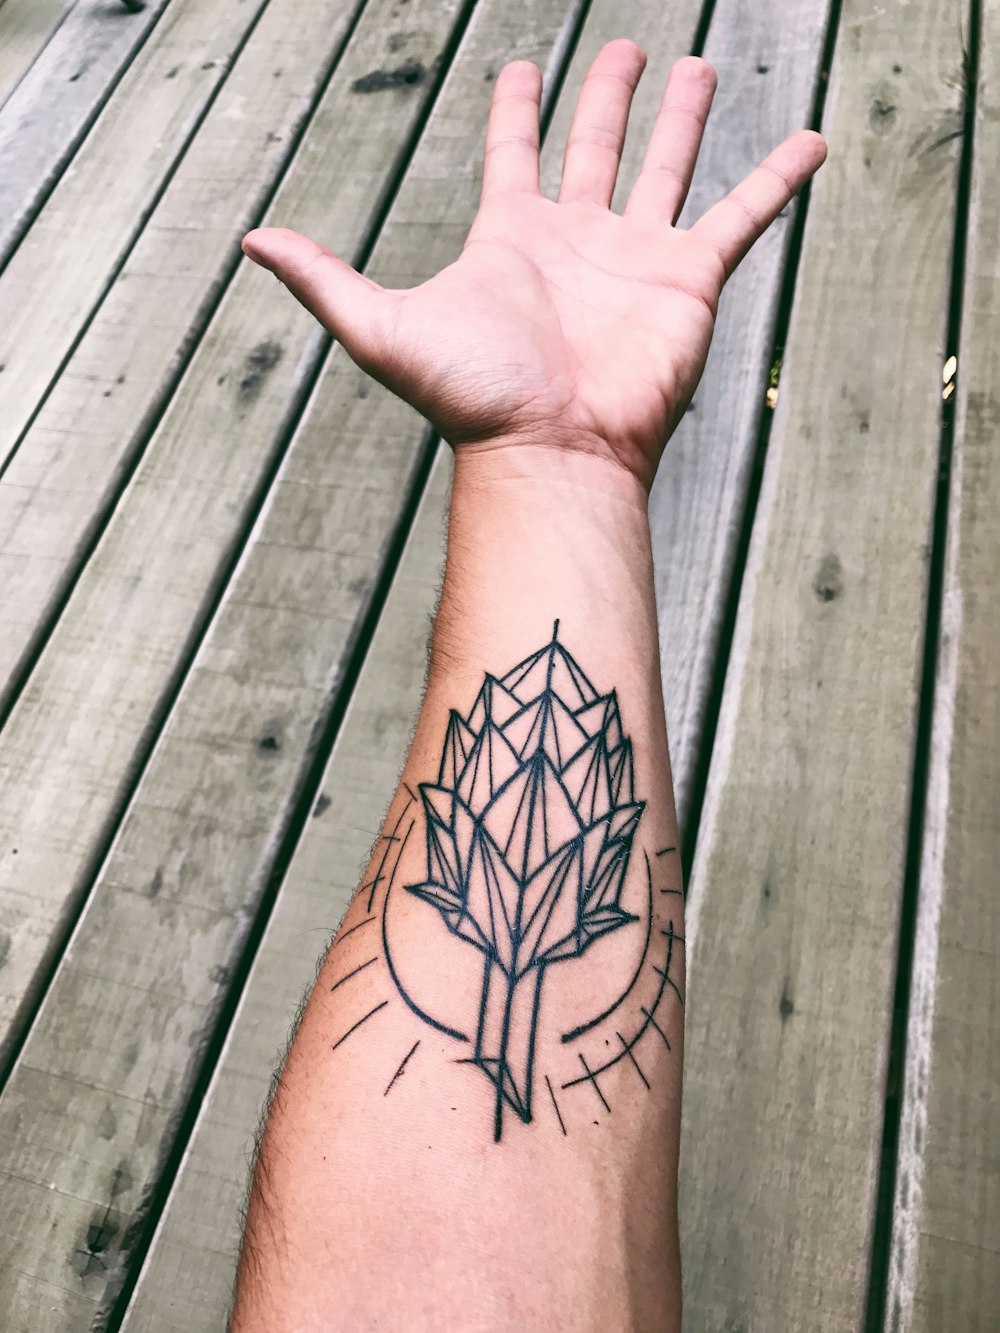 tatuaje de flor negra y roja en la mano humana derecha